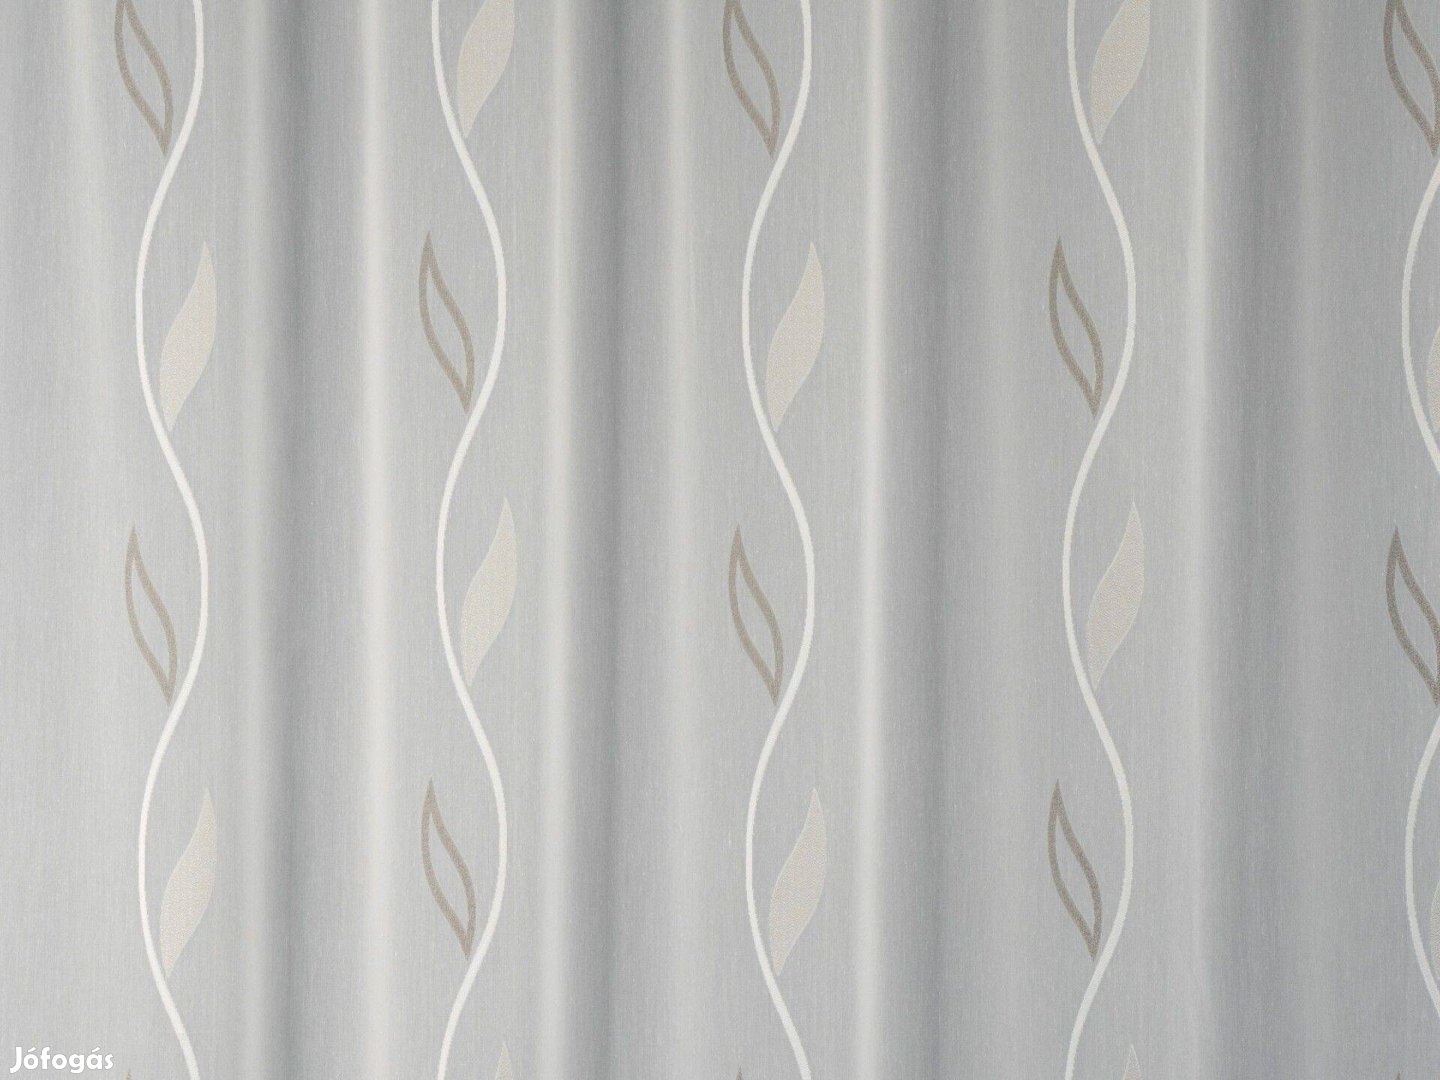 Hófehér-barna új hullám mintás függöny (8m x 180 cm)